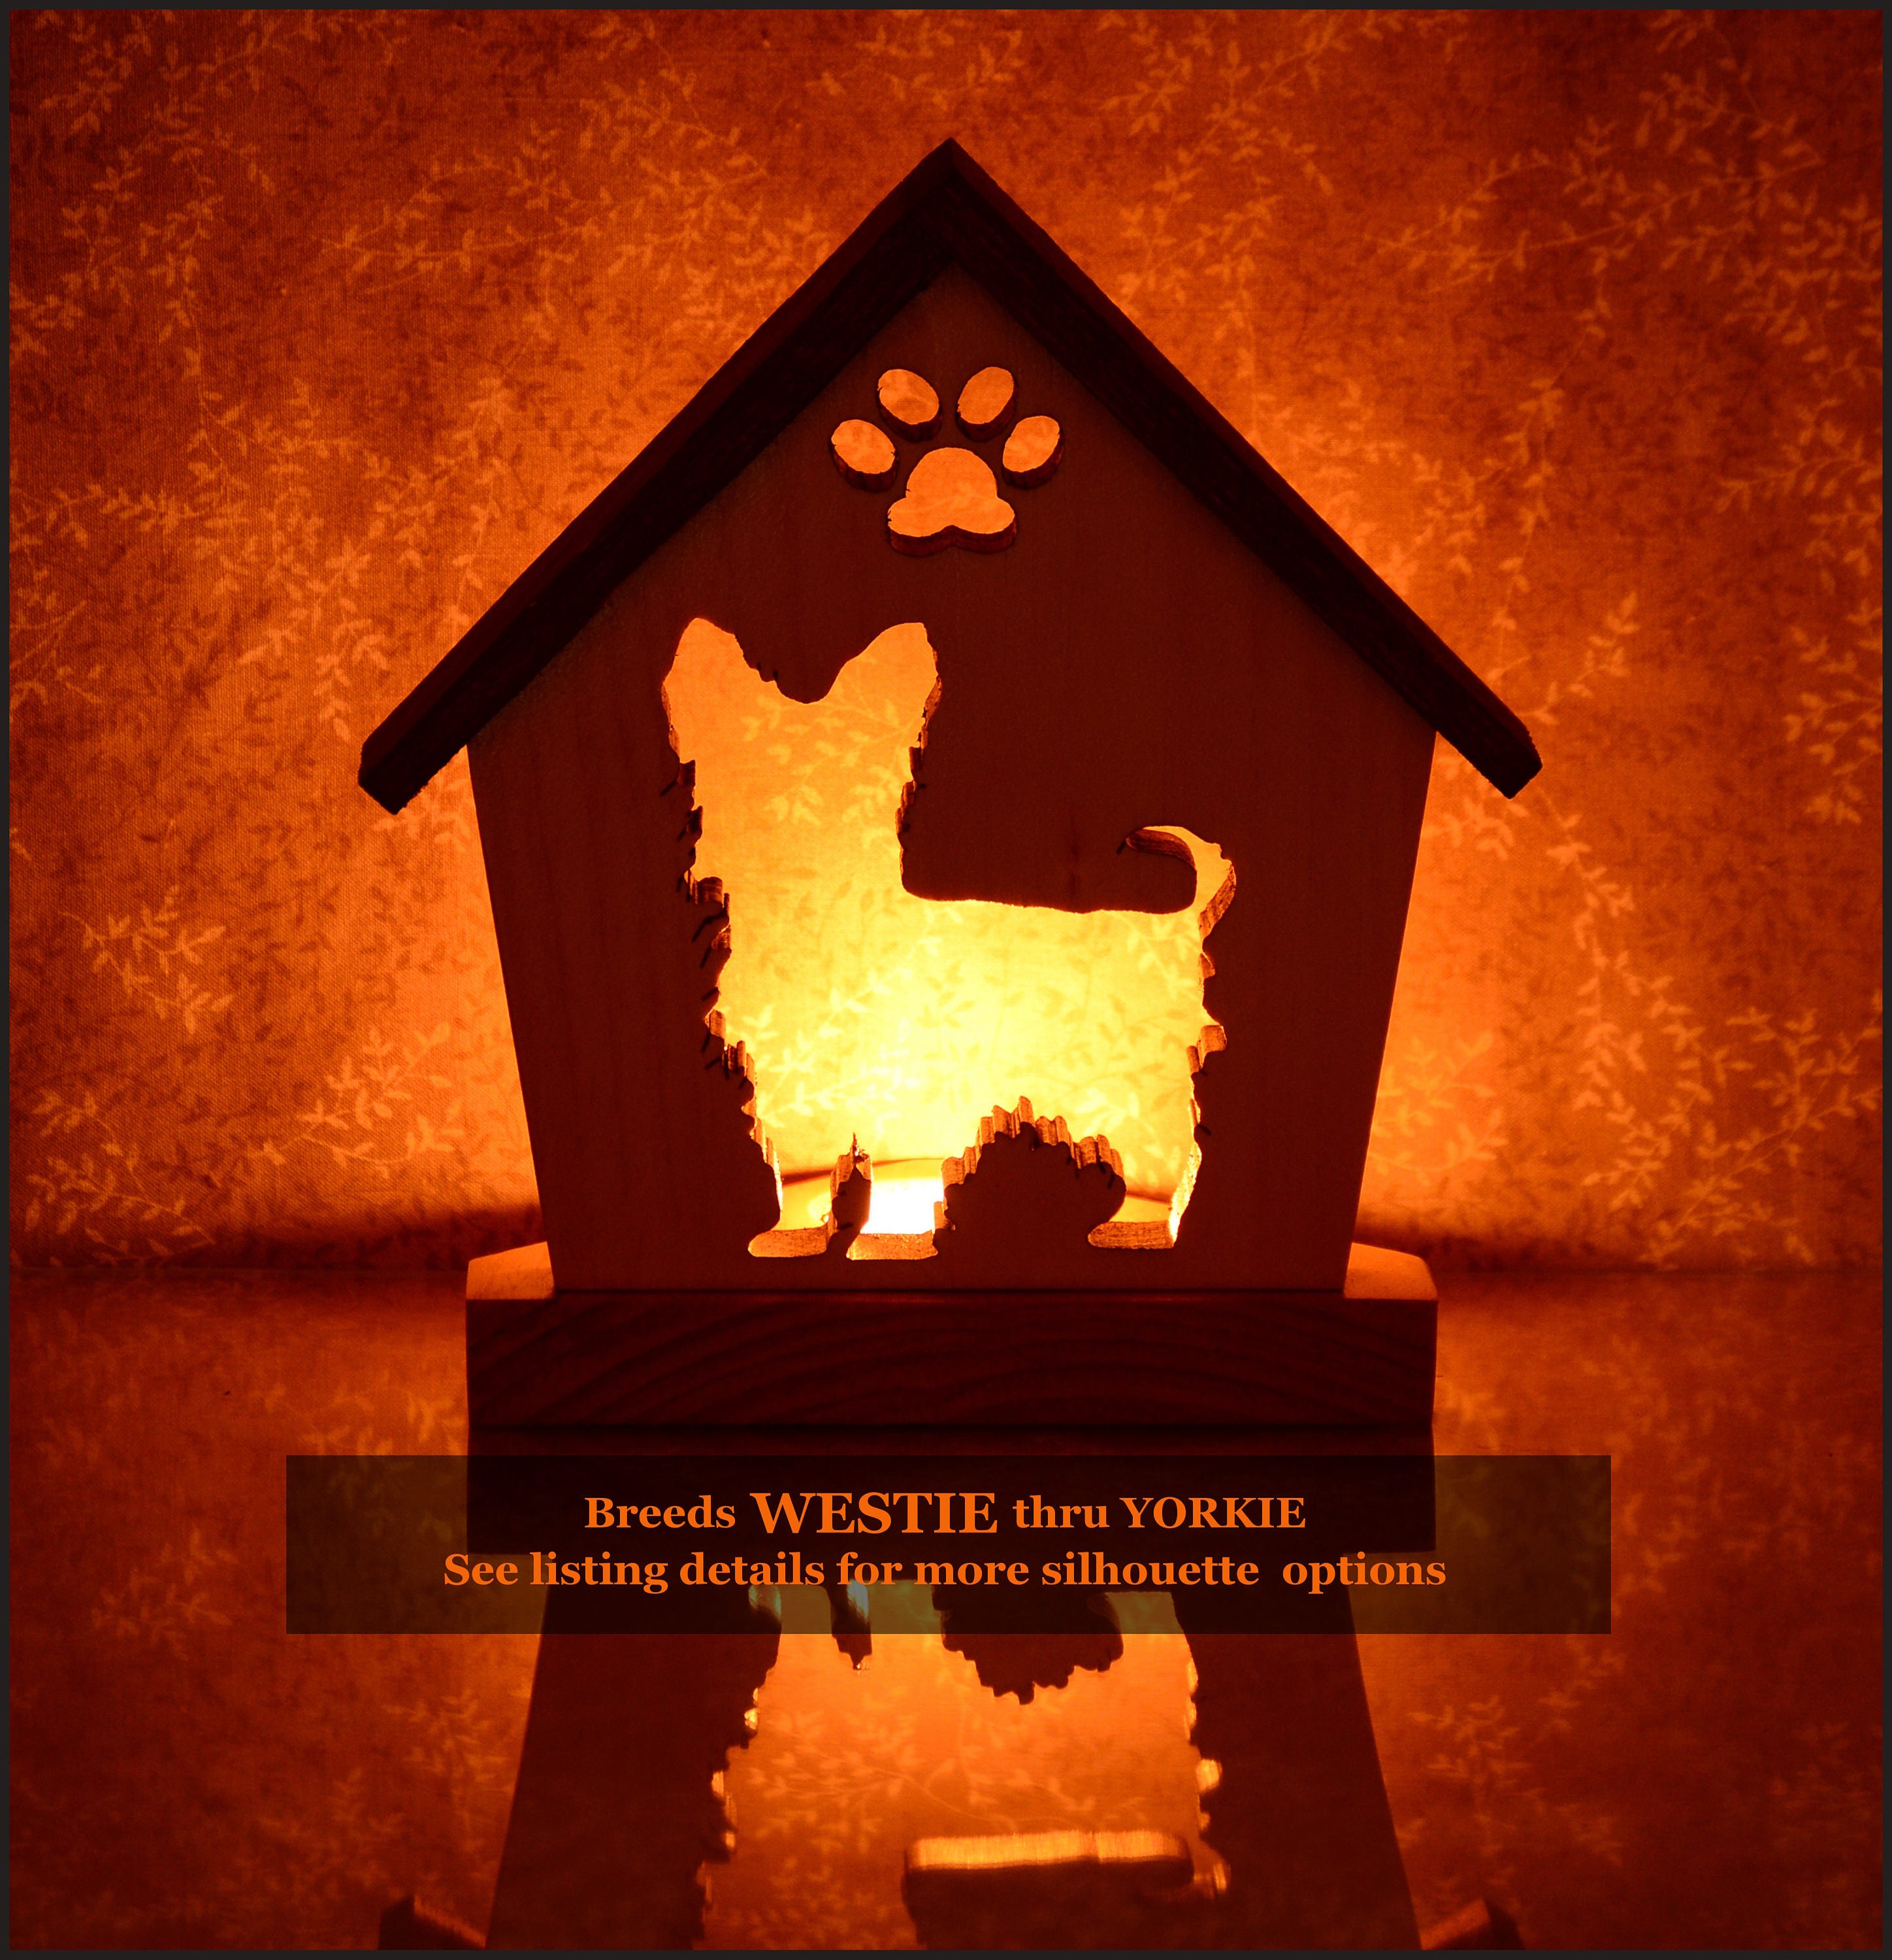 Personalized Gift For Dog Loverspet Memorialcandle Tealight Holder | Westiewest Highlandyorkieyorkshire| Unique Giftspet Sympathy